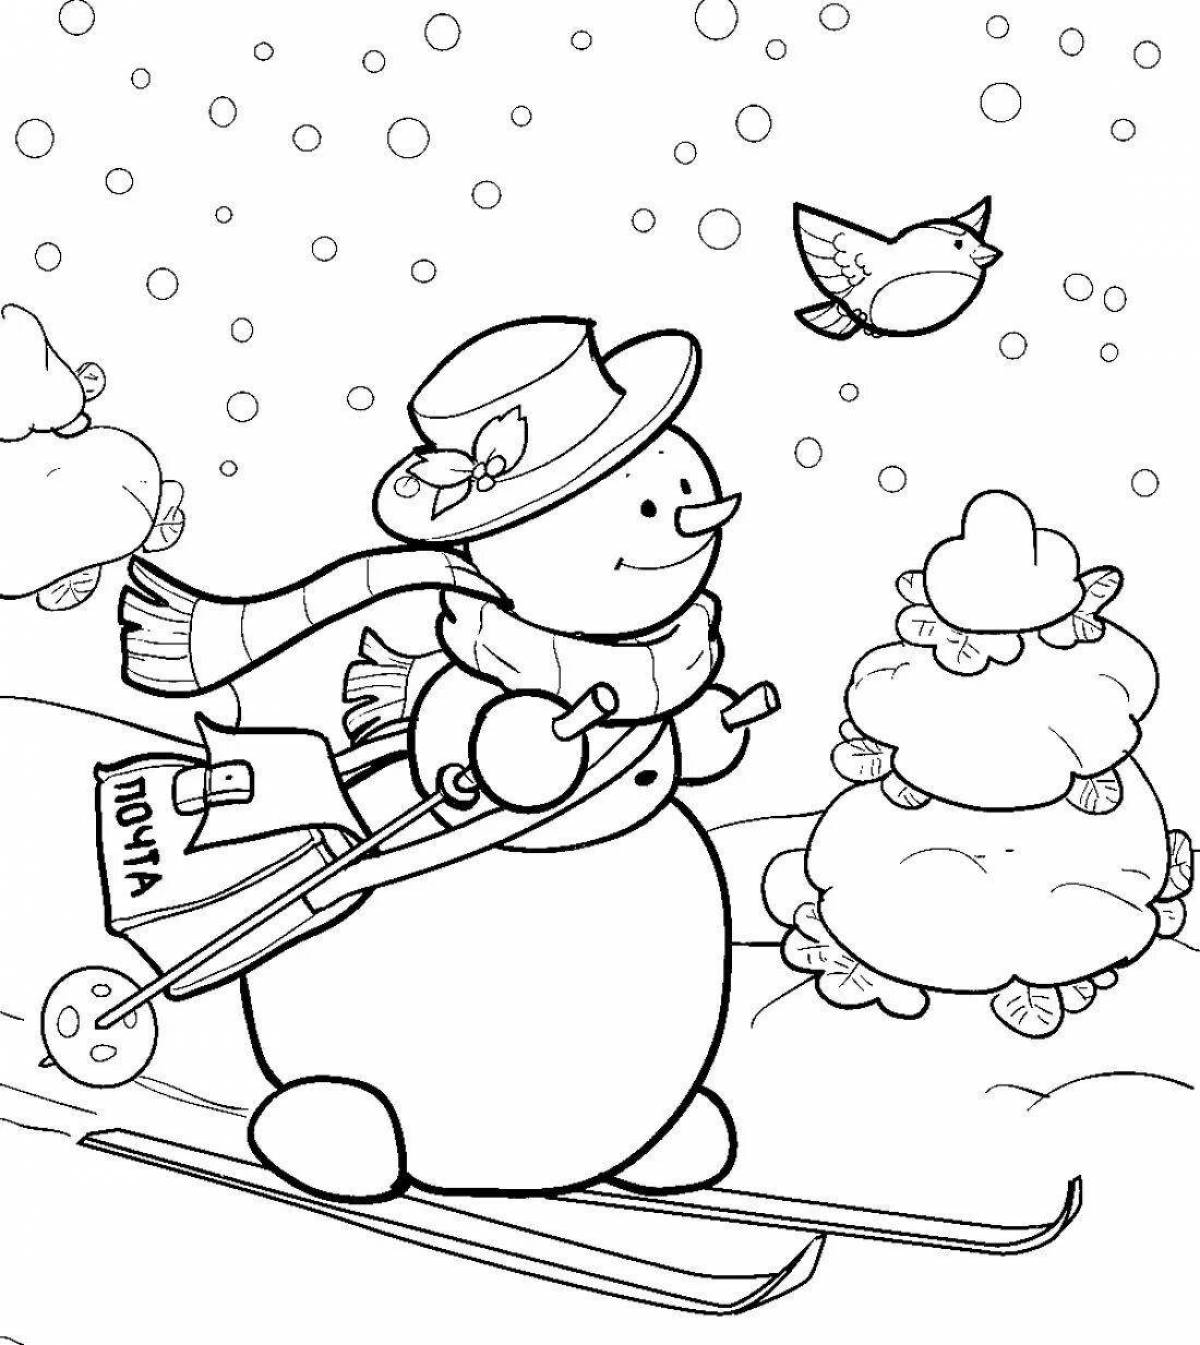 Snowman on skis #20